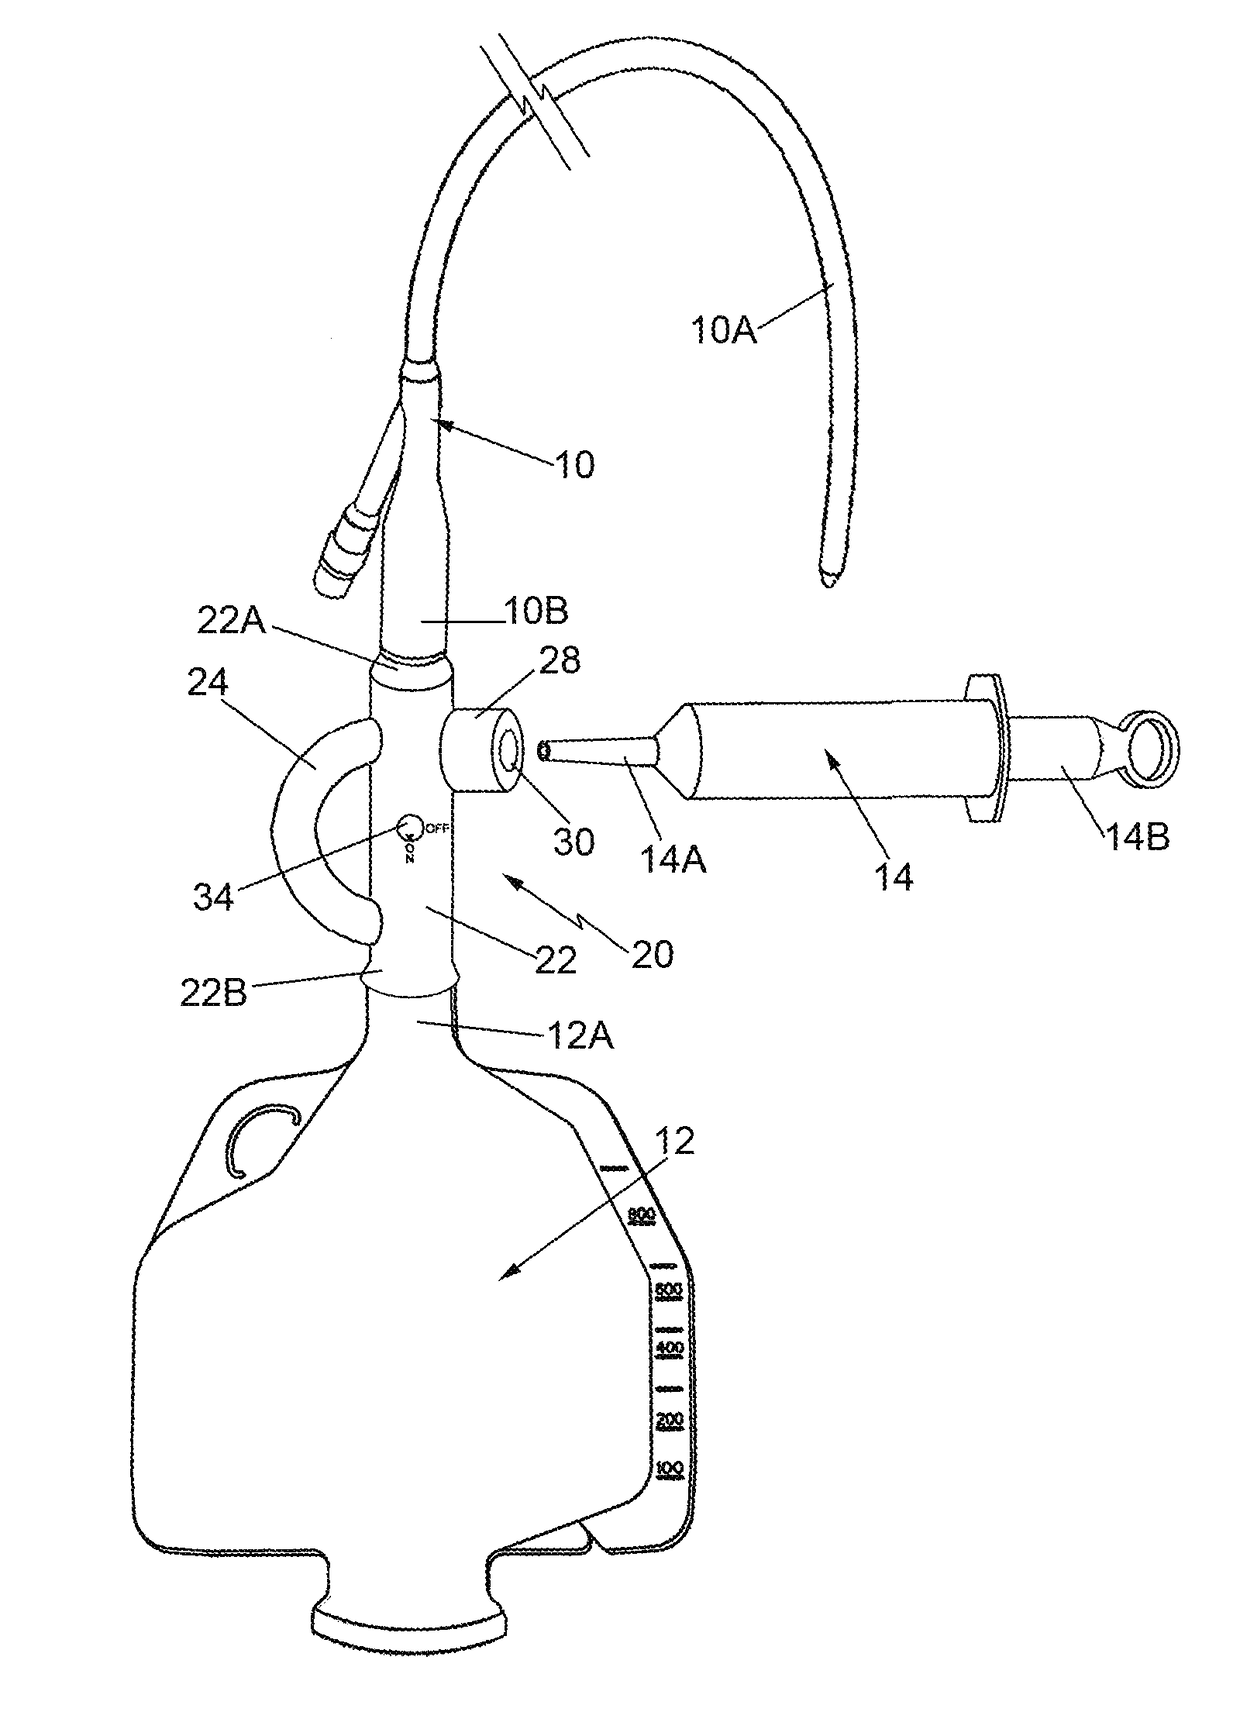 Urinary catheter irrigation device and method of irrigating a urinary catheter